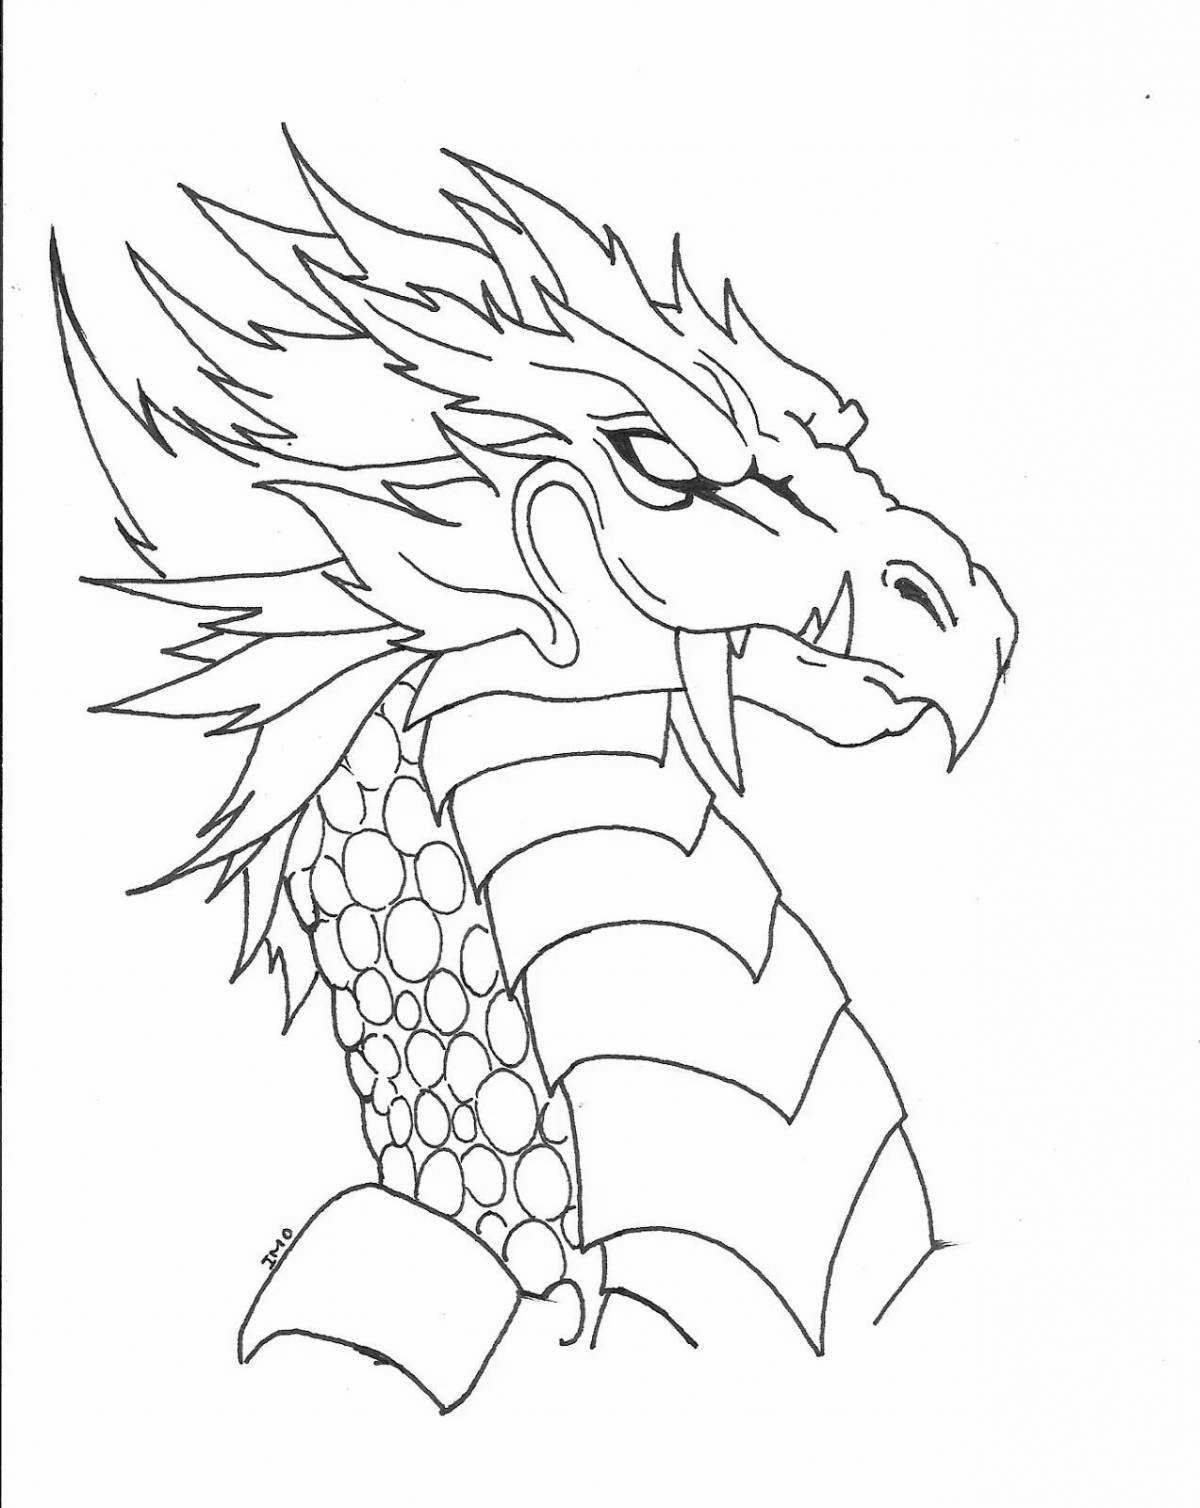 Exquisite dragon head coloring book